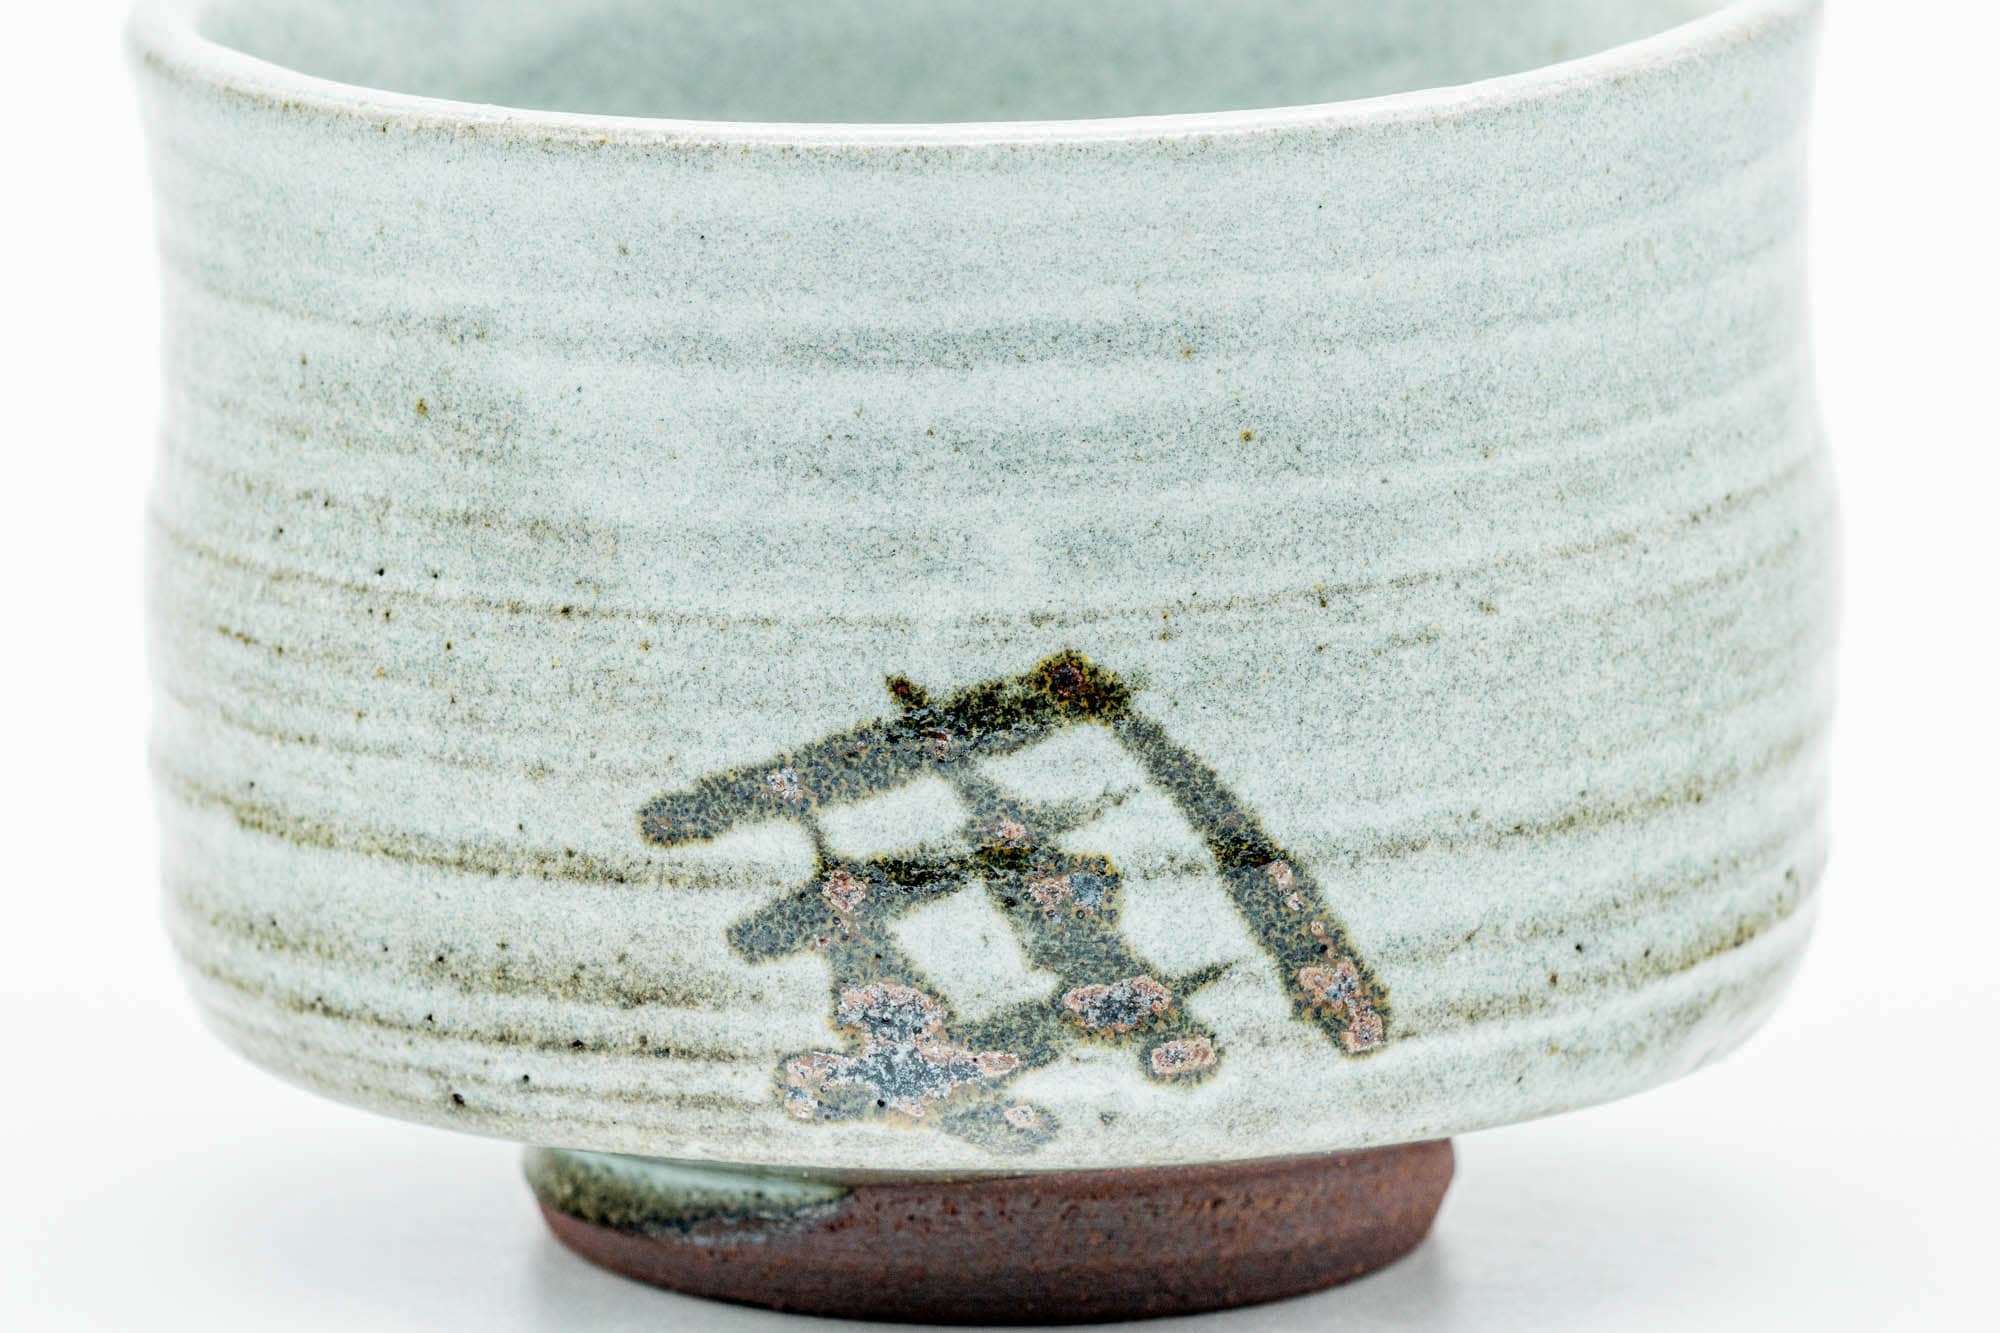 Japanese Matcha Bowl - Long Grass Spiraling Drip-Glazed Chawan - 300ml